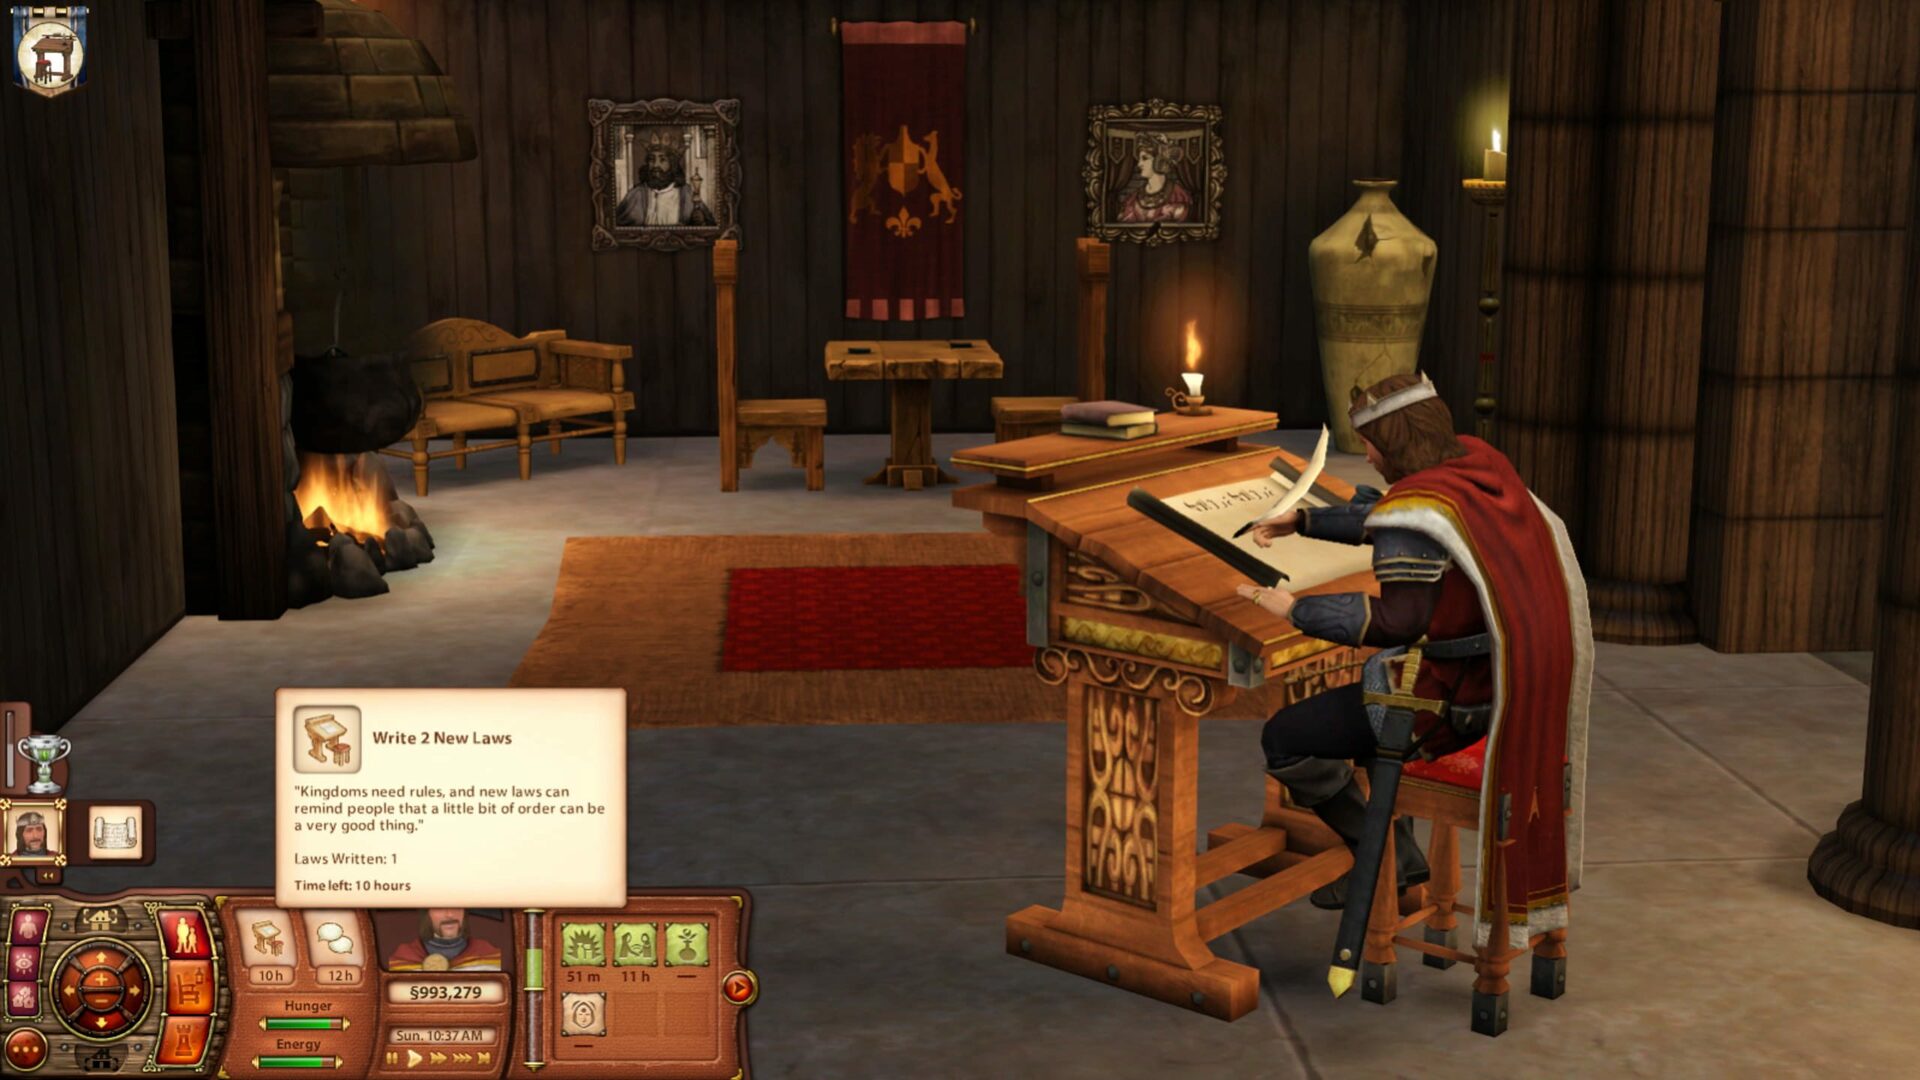 模拟人生：中世纪 1.0 for Mac|Mac版下载 | The Sims Medieval